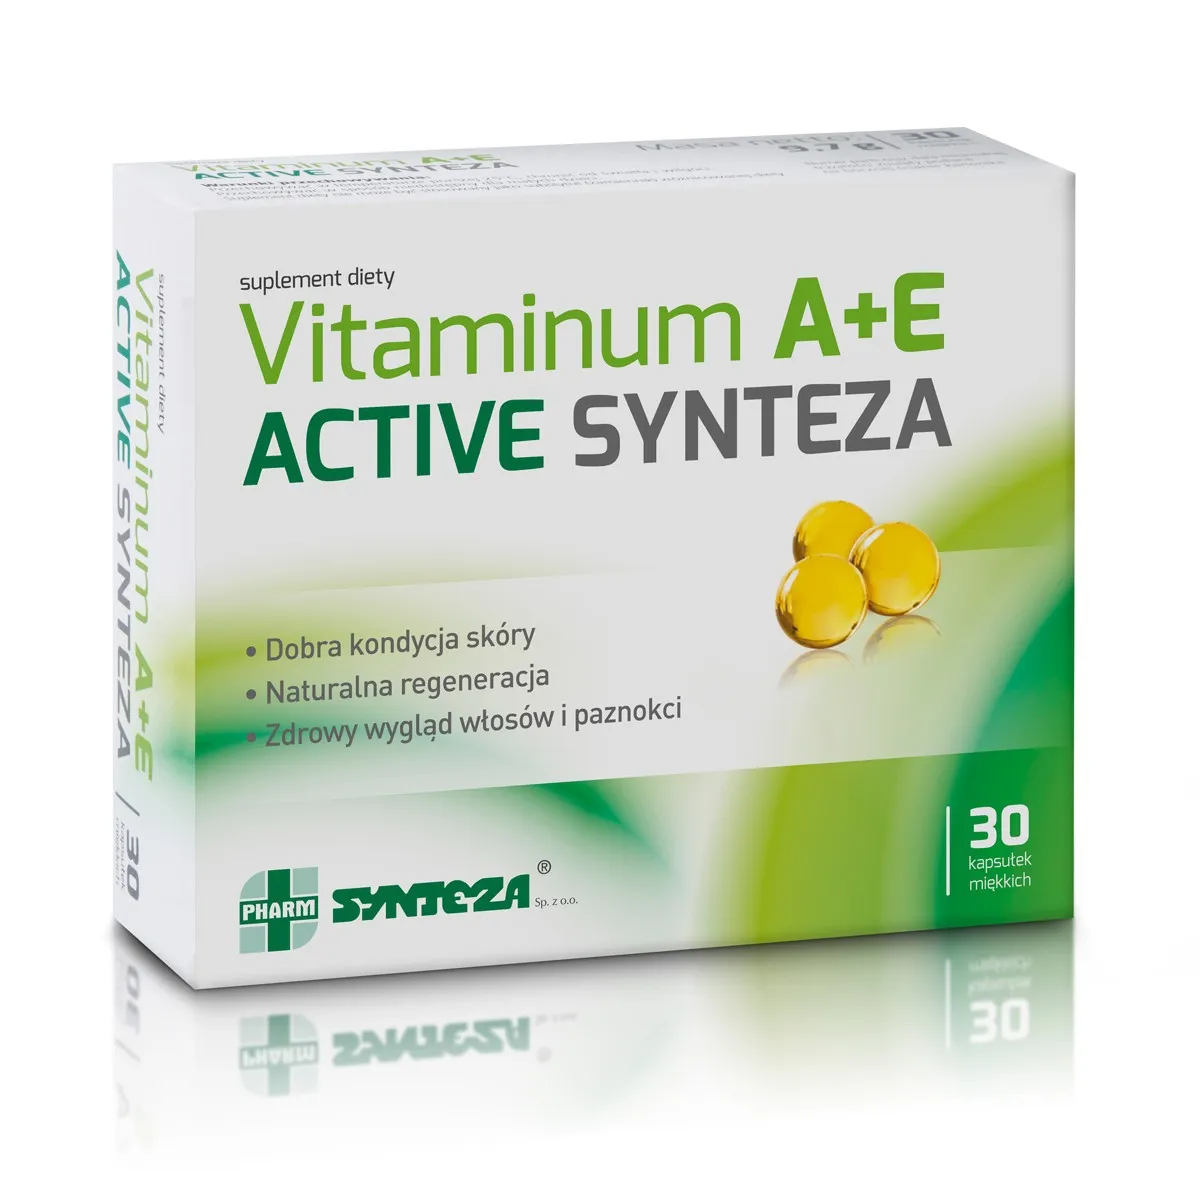 Vitaminum A+E Active Synteza, suplement diety, 30 kapsułek